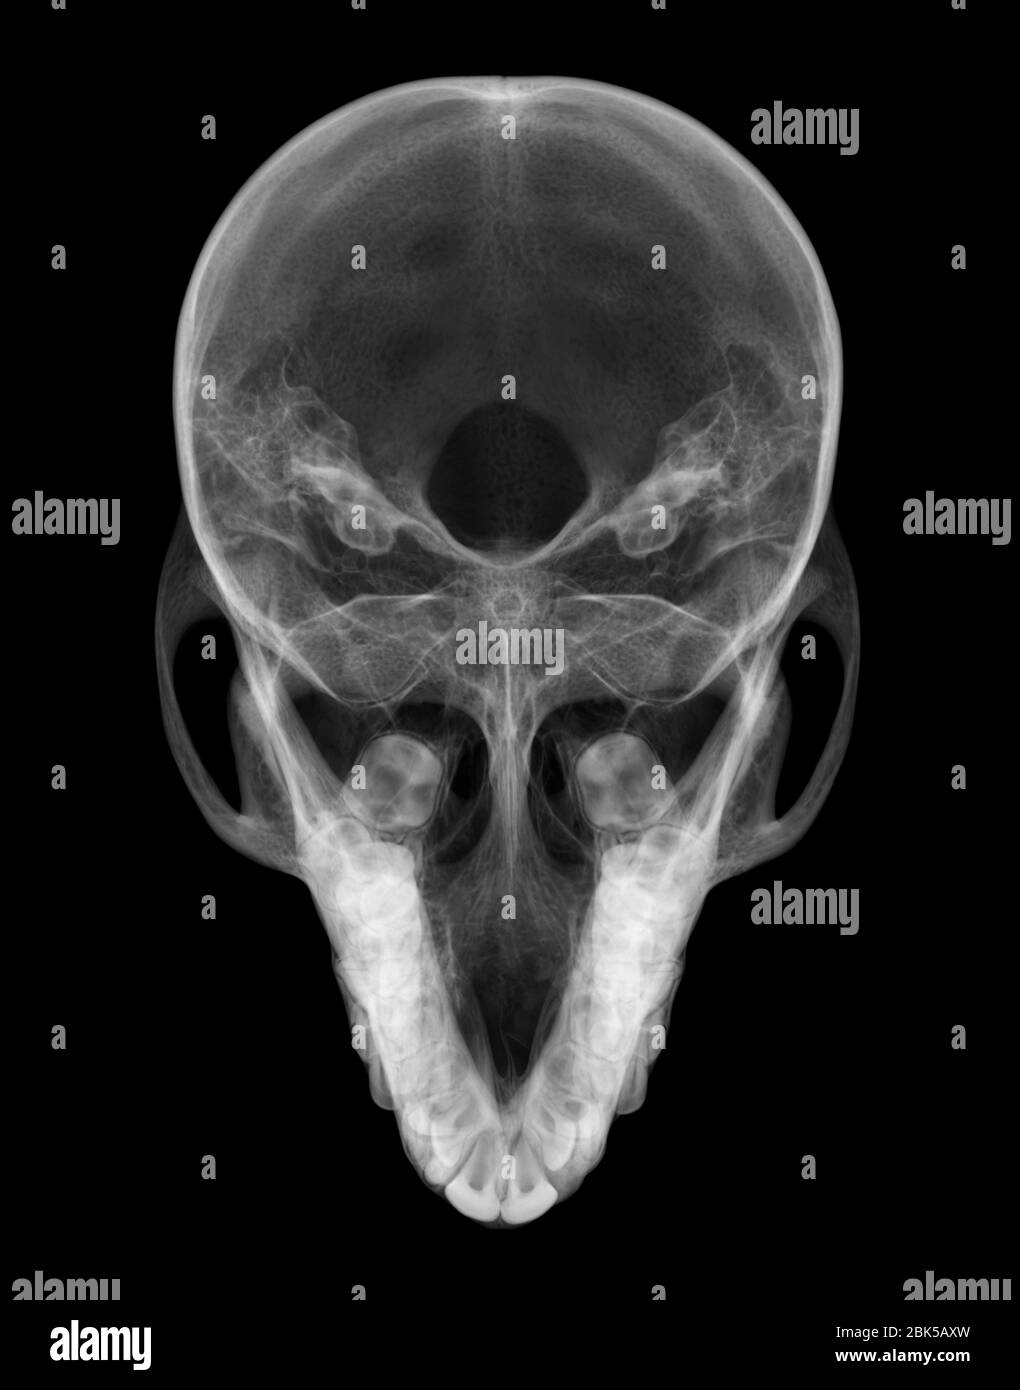 Muskrat skull from above, X-ray. Stock Photo